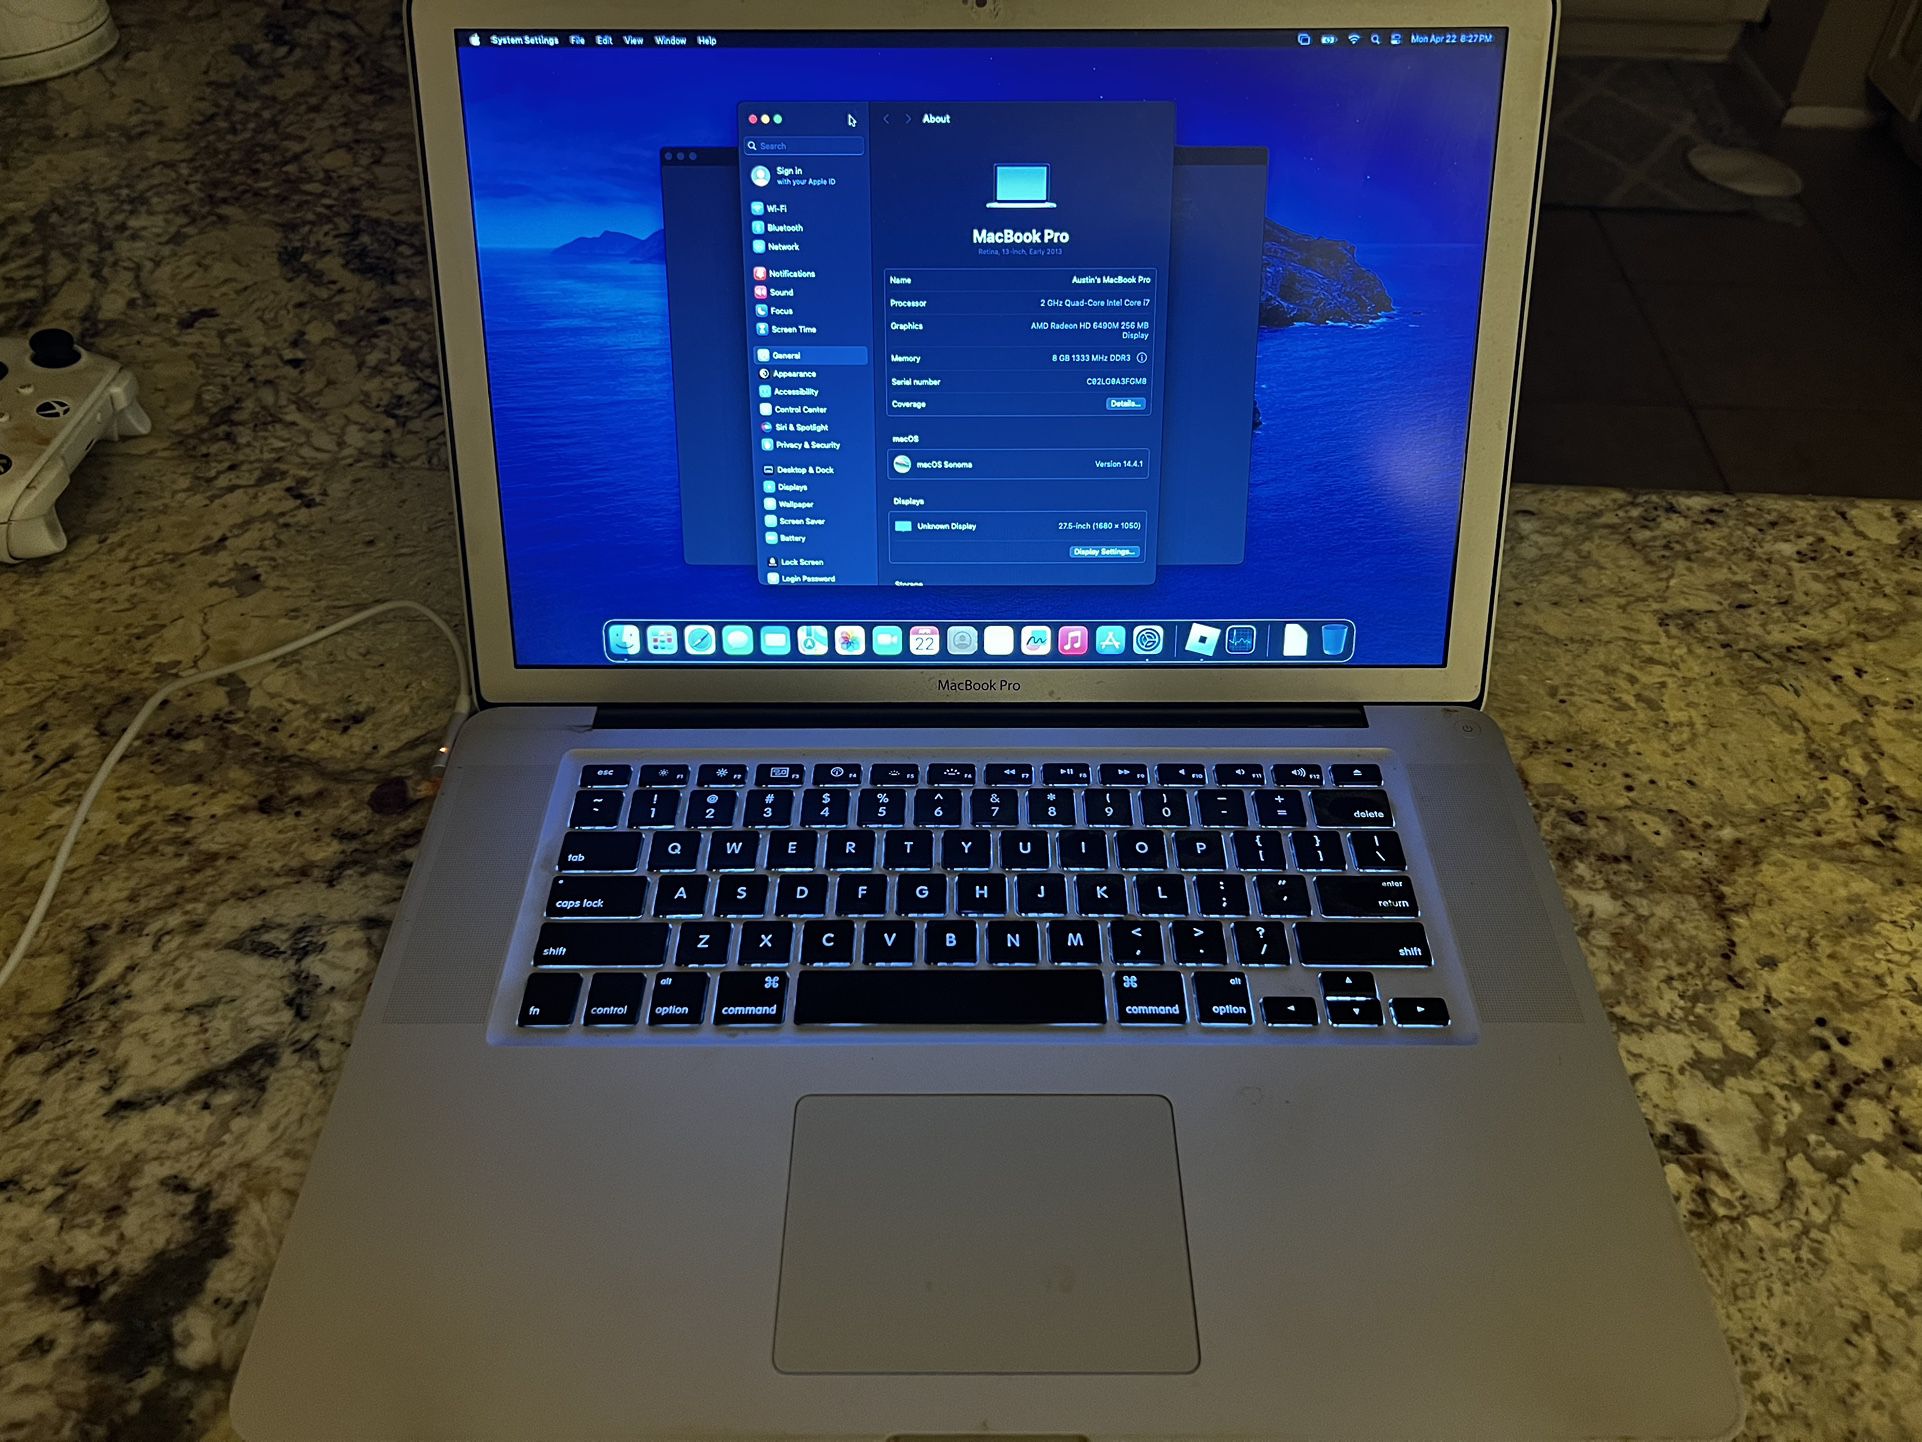 MacBook Pro 13” Laptop 2013 Model